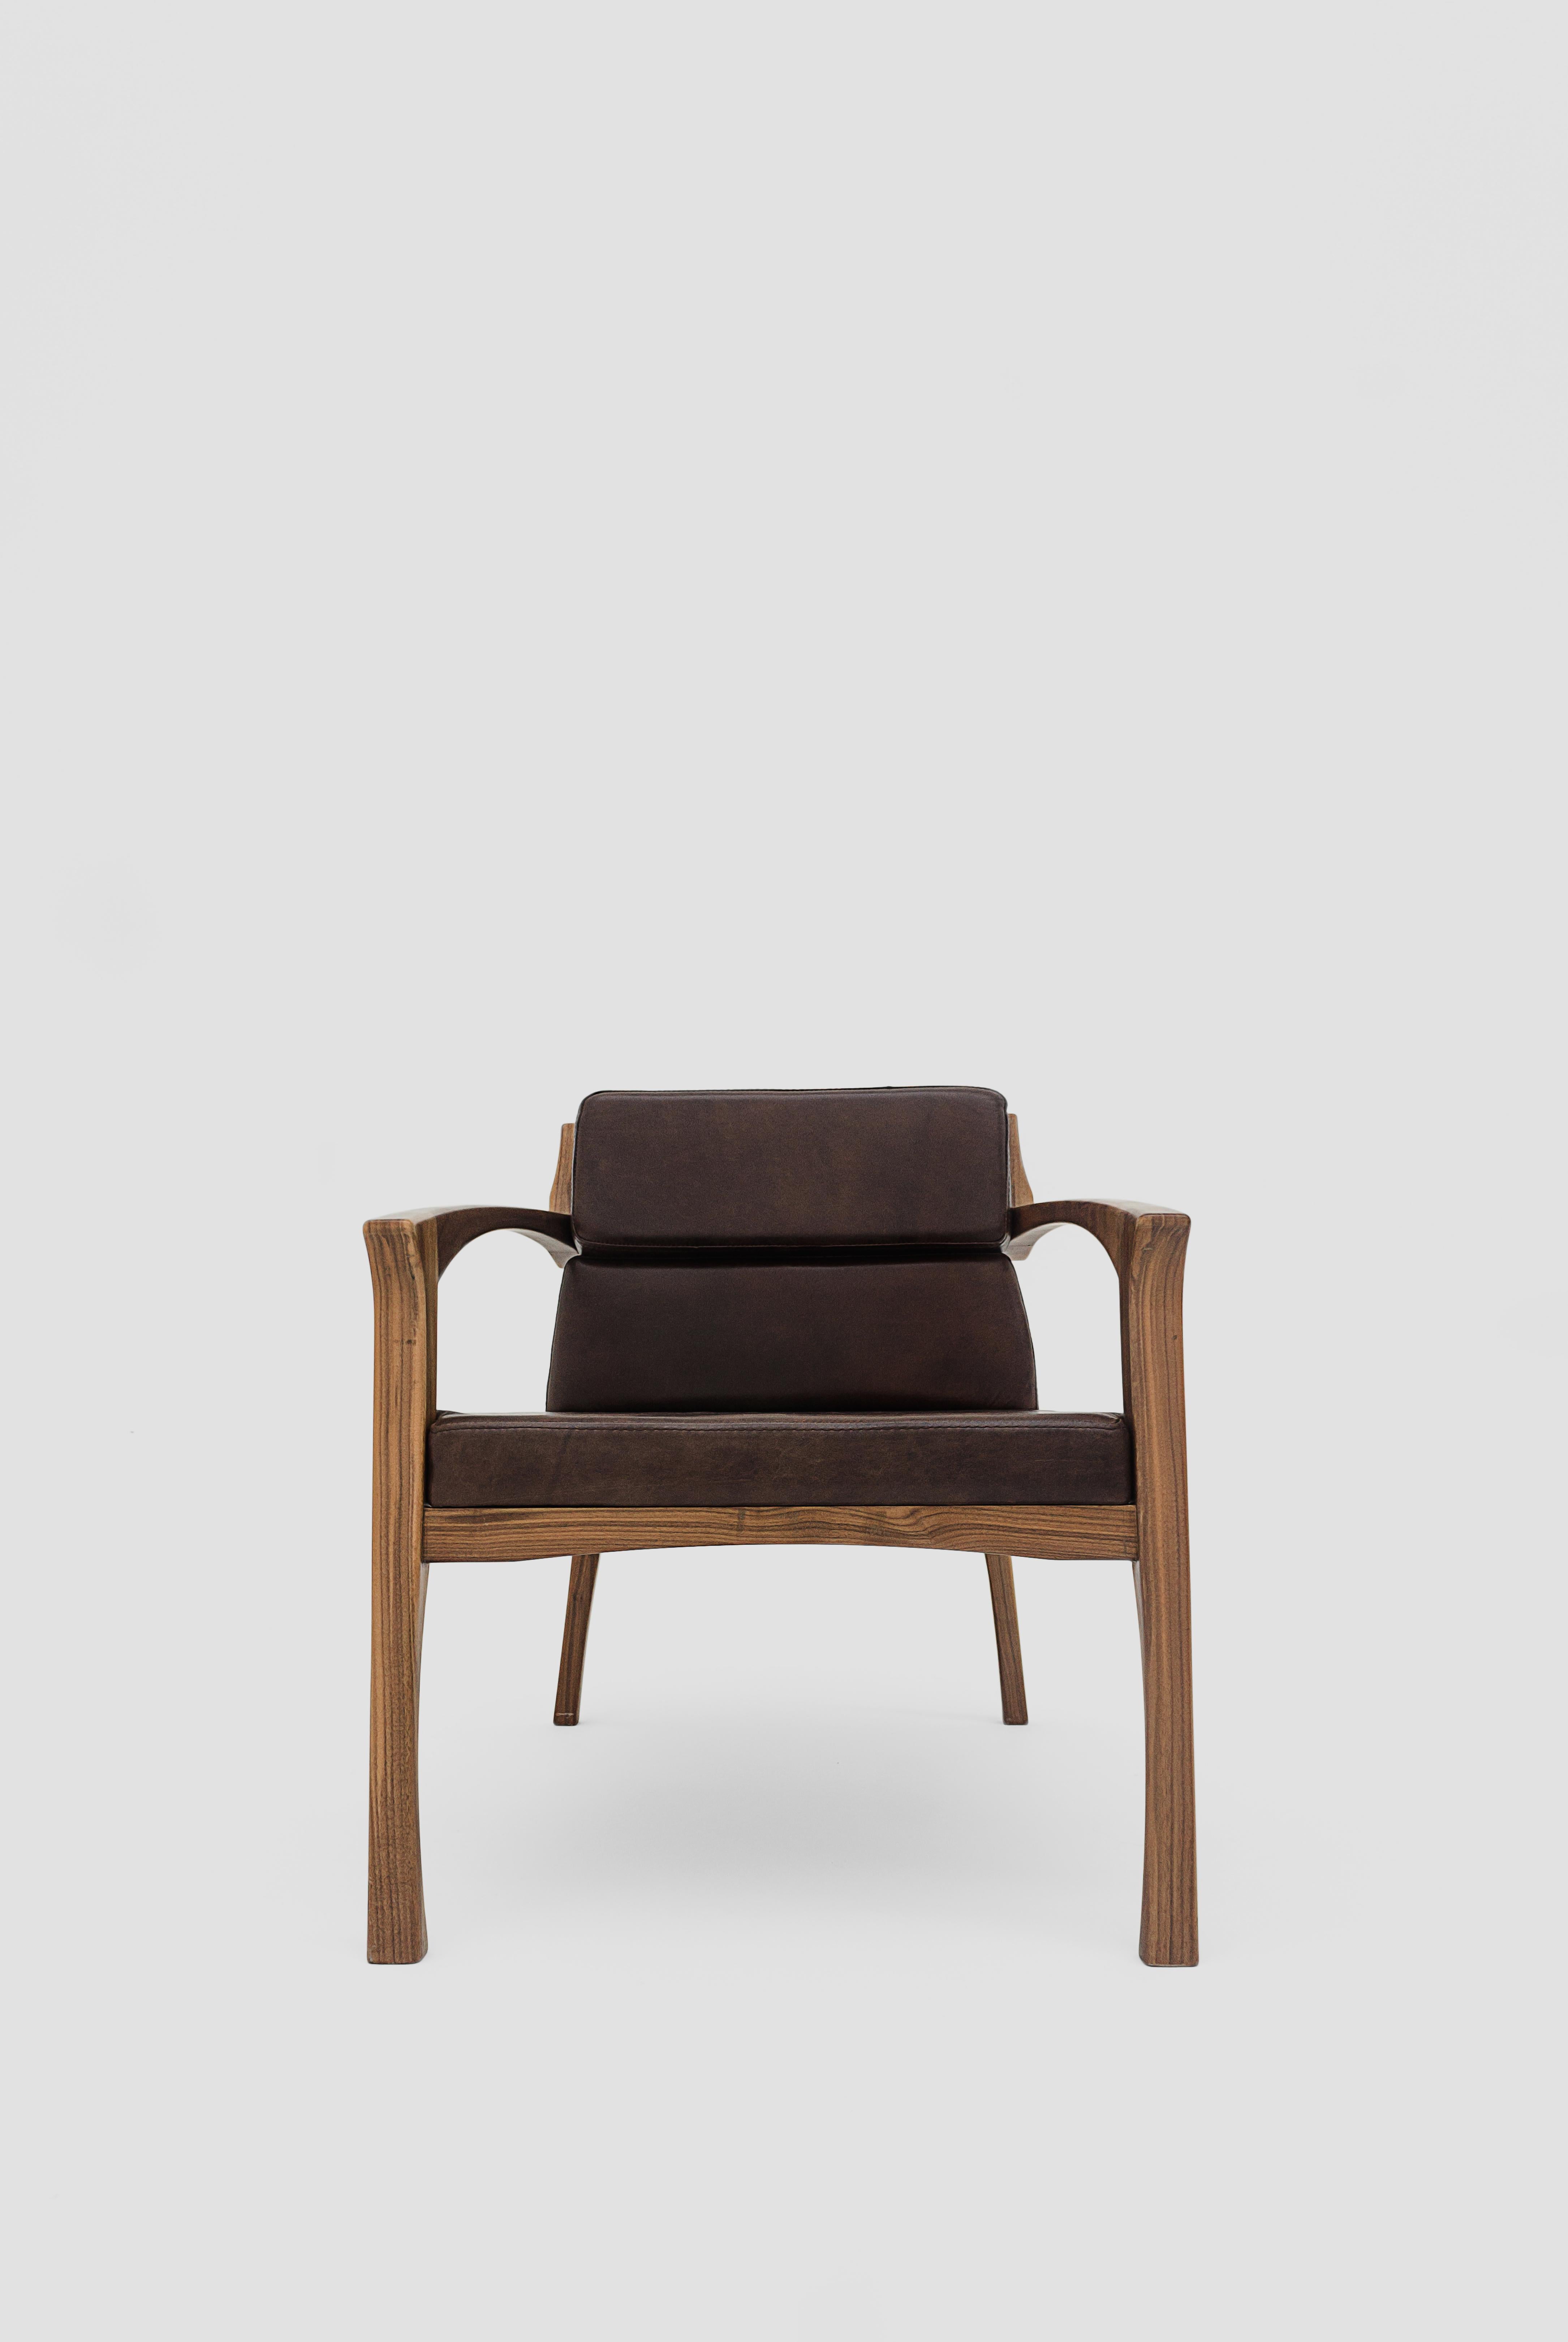 Brown Helmut armchair by Arturo Verástegui
Dimensions: D 72 x W 76 x H 70 cm
Materials: walnut wood, leather.

Armchair made of solid holm walnut, leather.

Arturo Verástegui has been the director and founder of BREUER since 2015. Arturo began